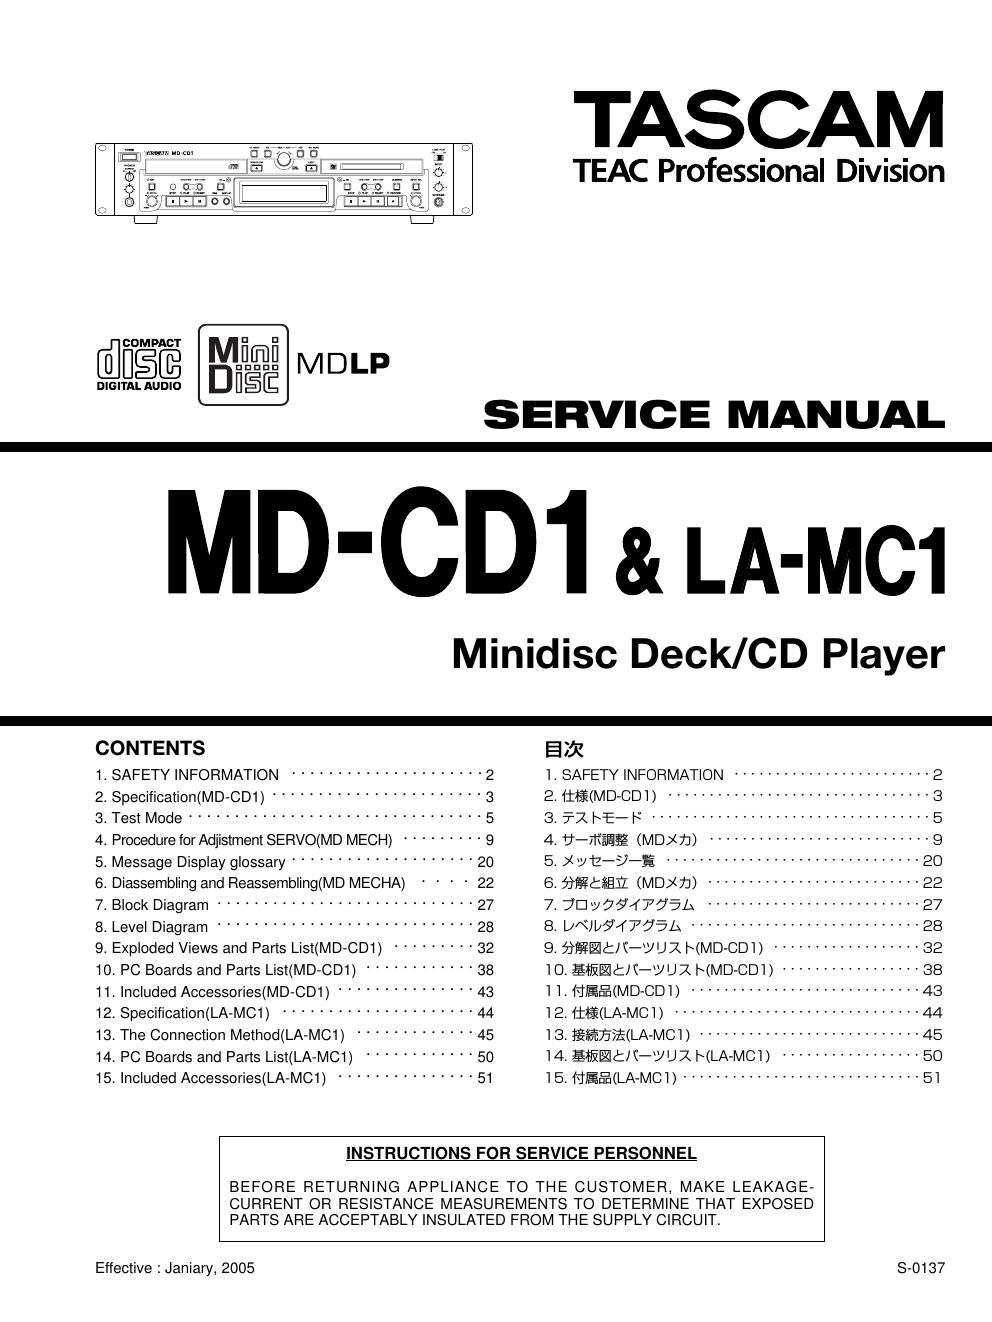 Tascam MD CD1 Minidisk CD Player Service Manual